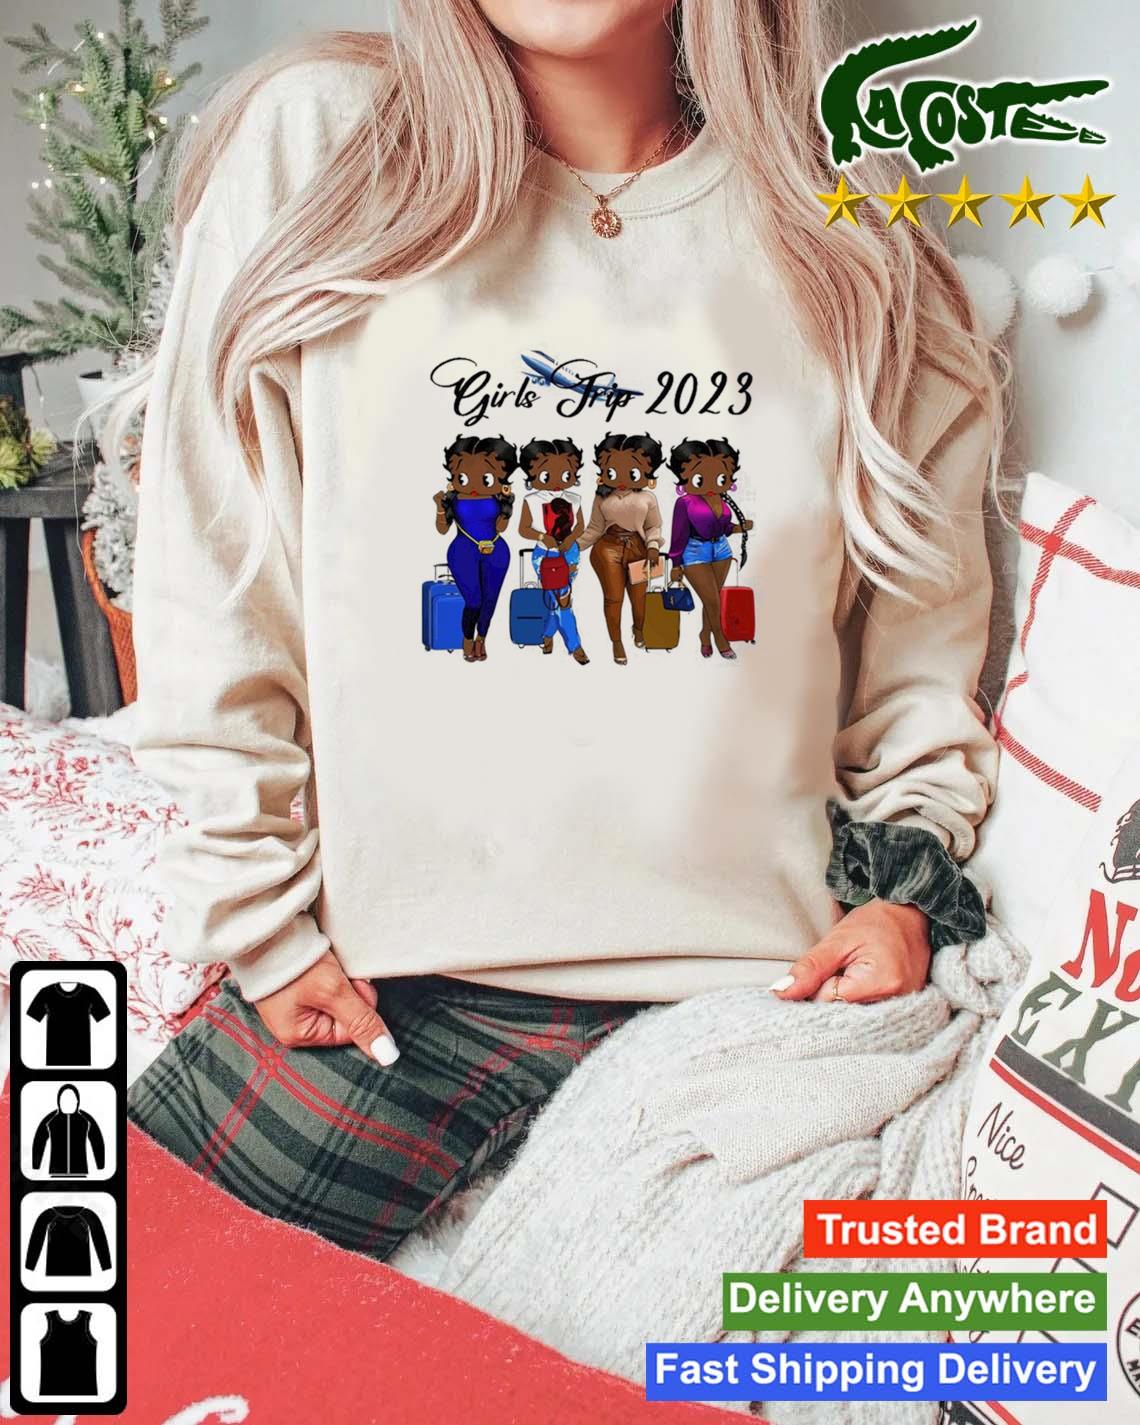 Black Betty Boop Girls Trip 2023 Sweats Mockup Sweater